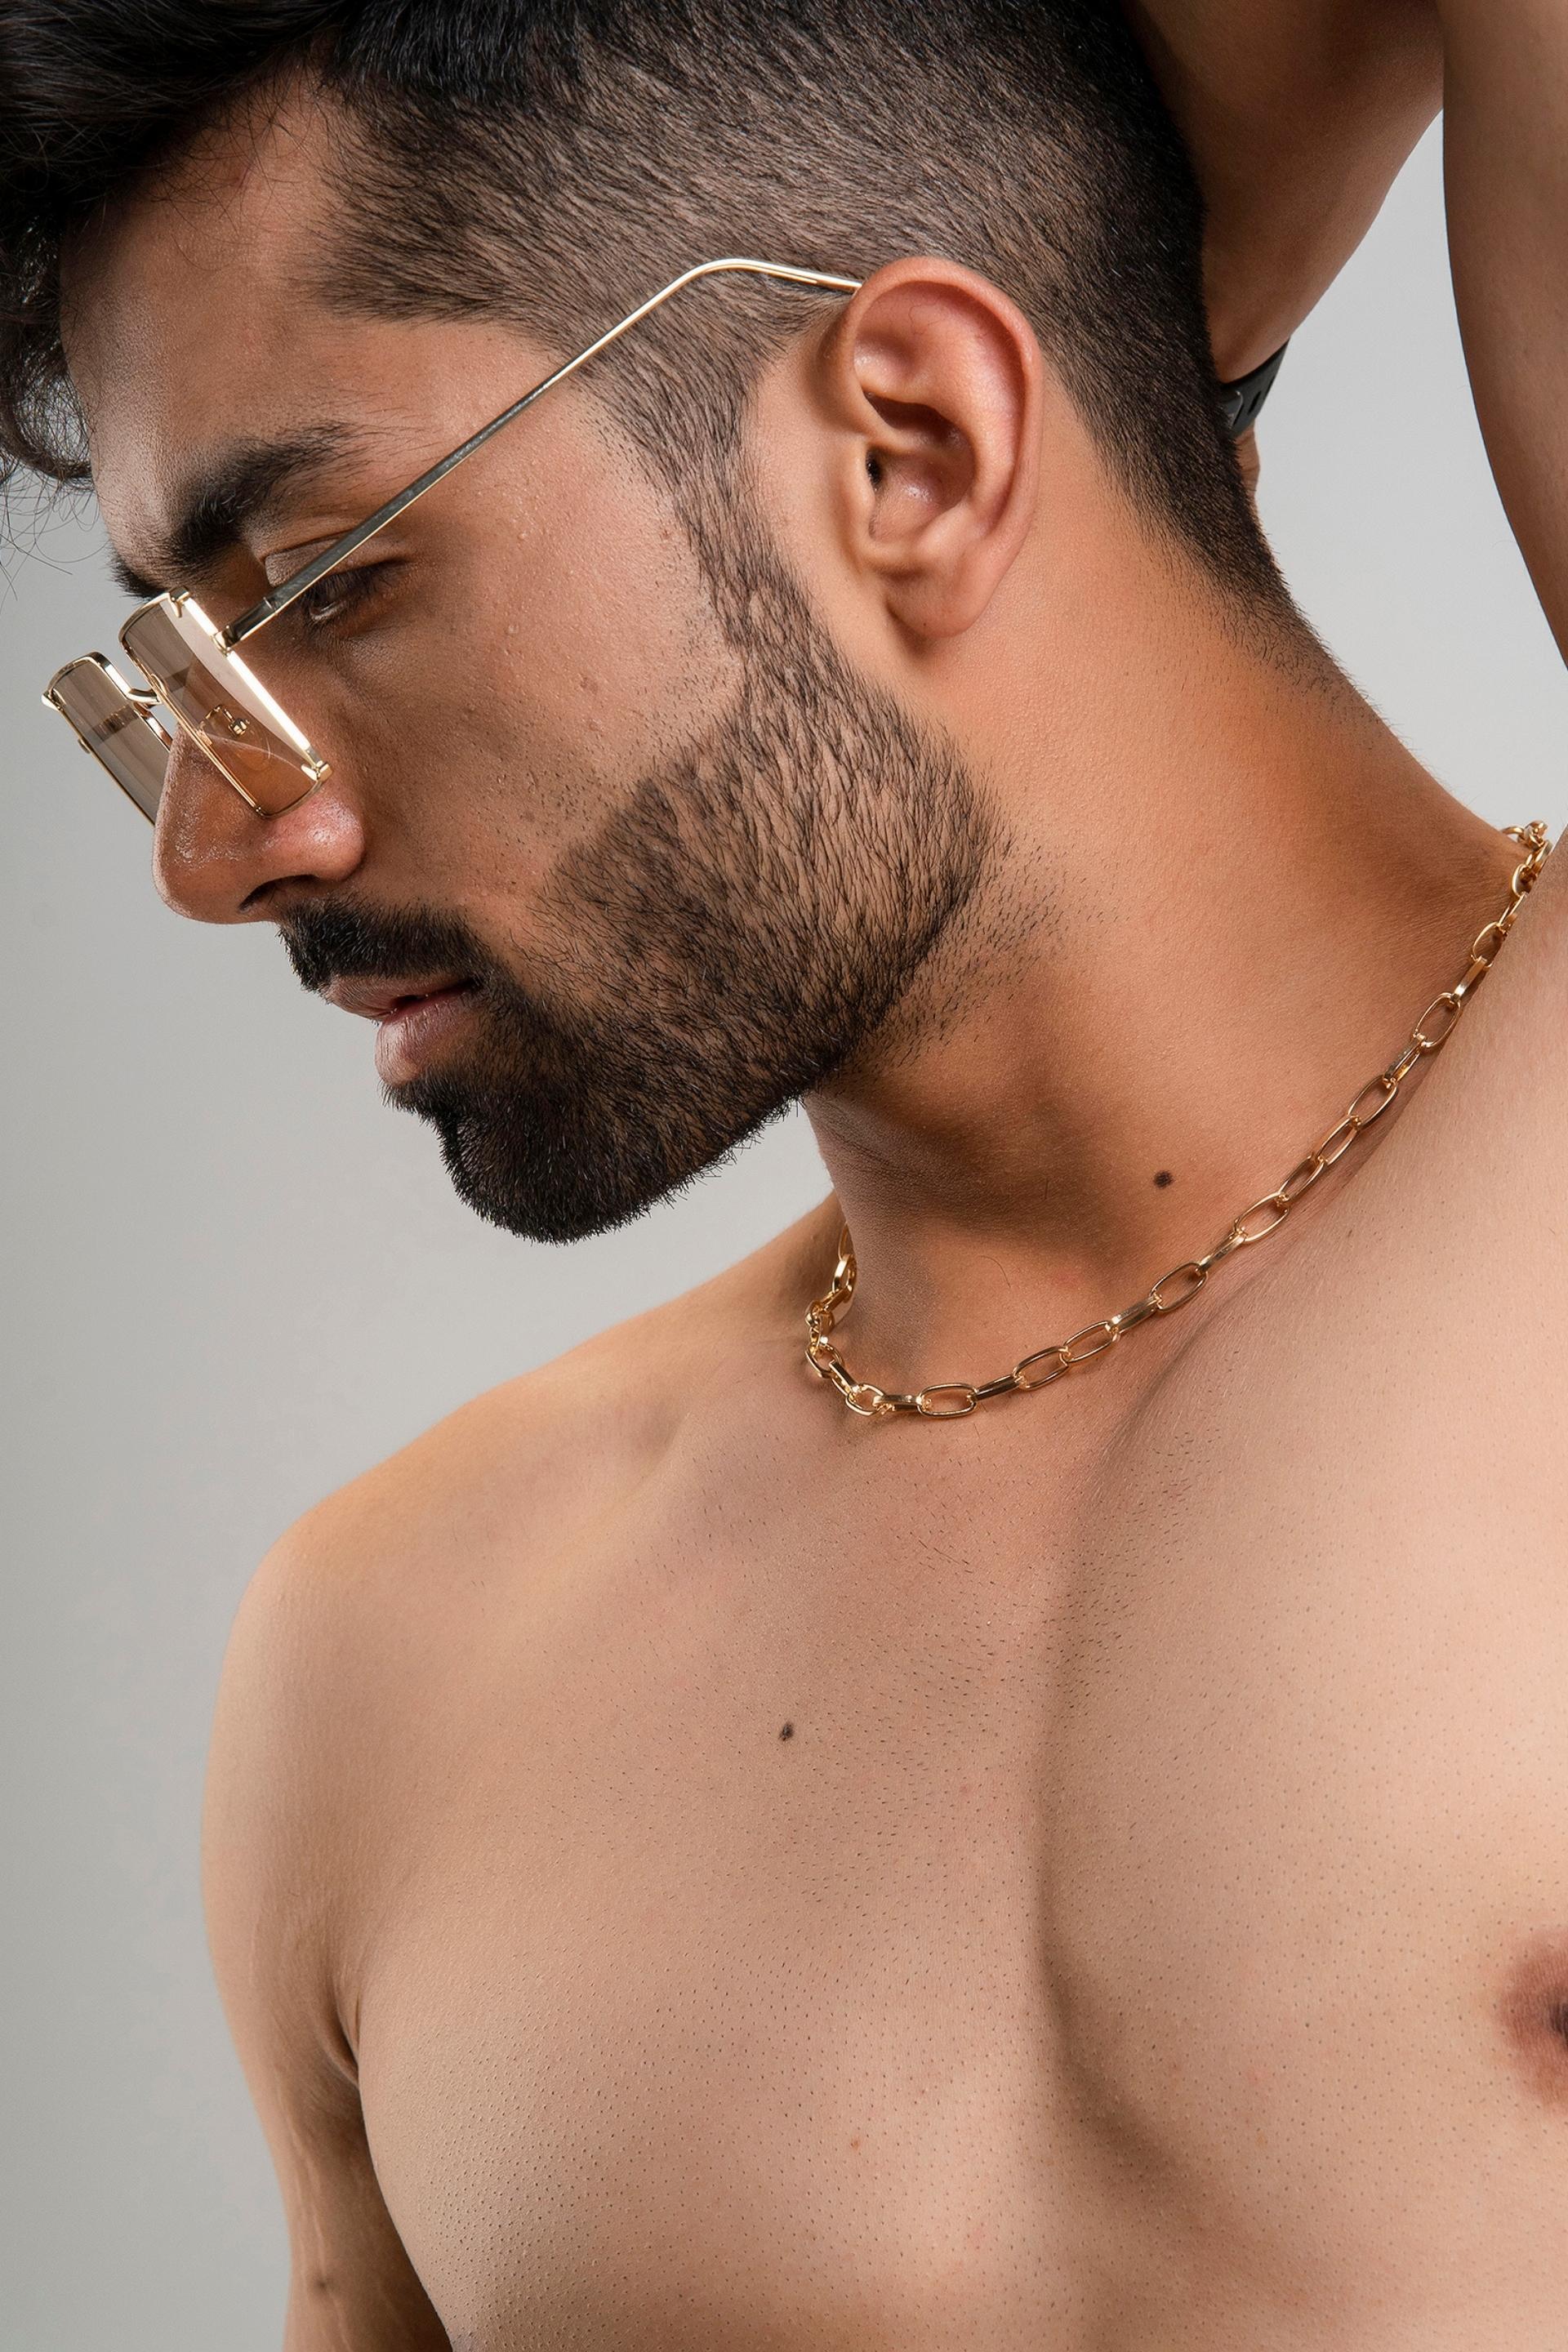 Firangi Yarn Golden Neck Chain Jewelery For Men